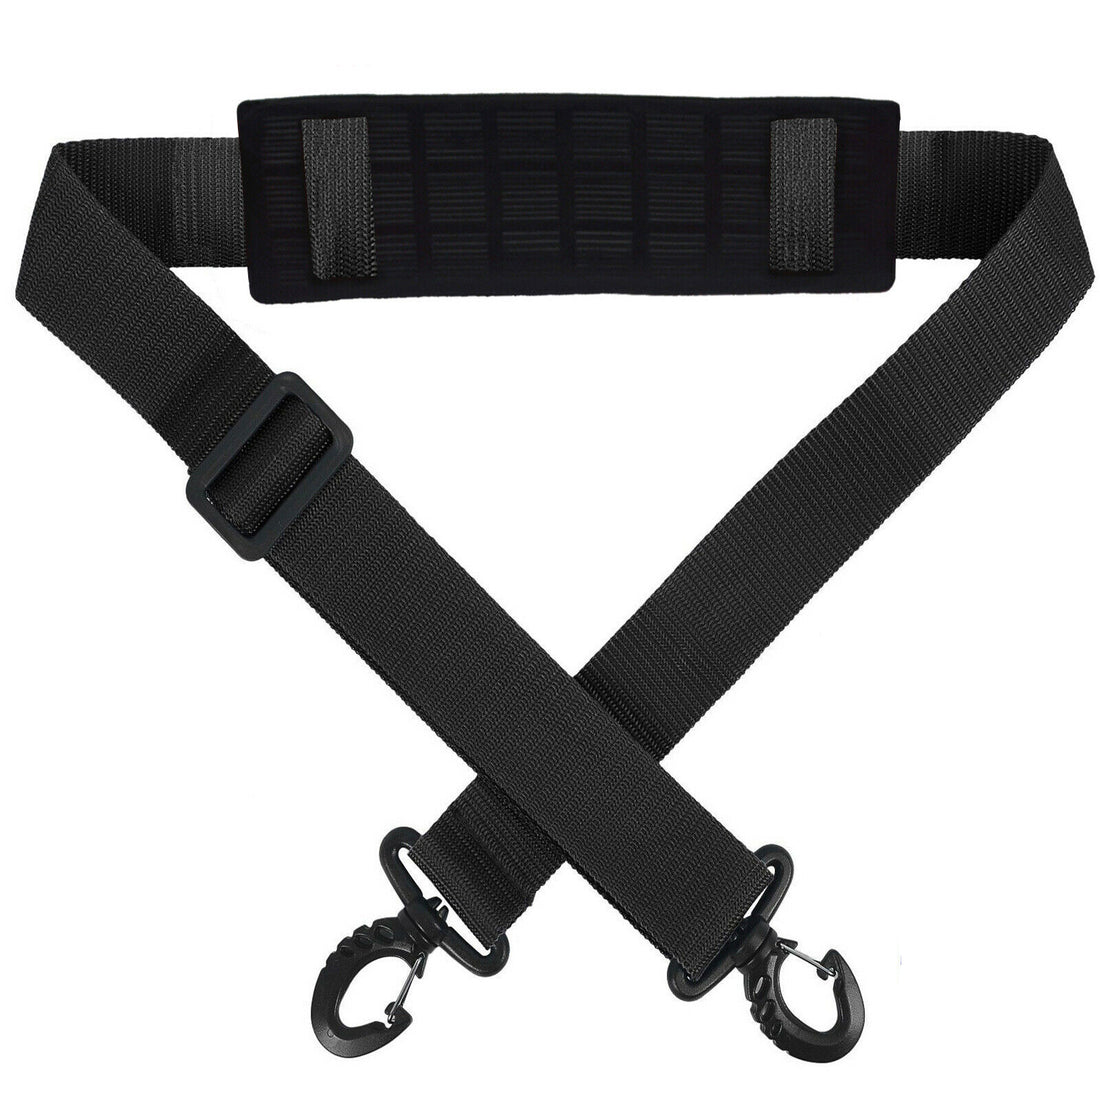 Plastic Nylon Shoulder Bag Belt Strap Crossbody Adjustable Replacement Handbag